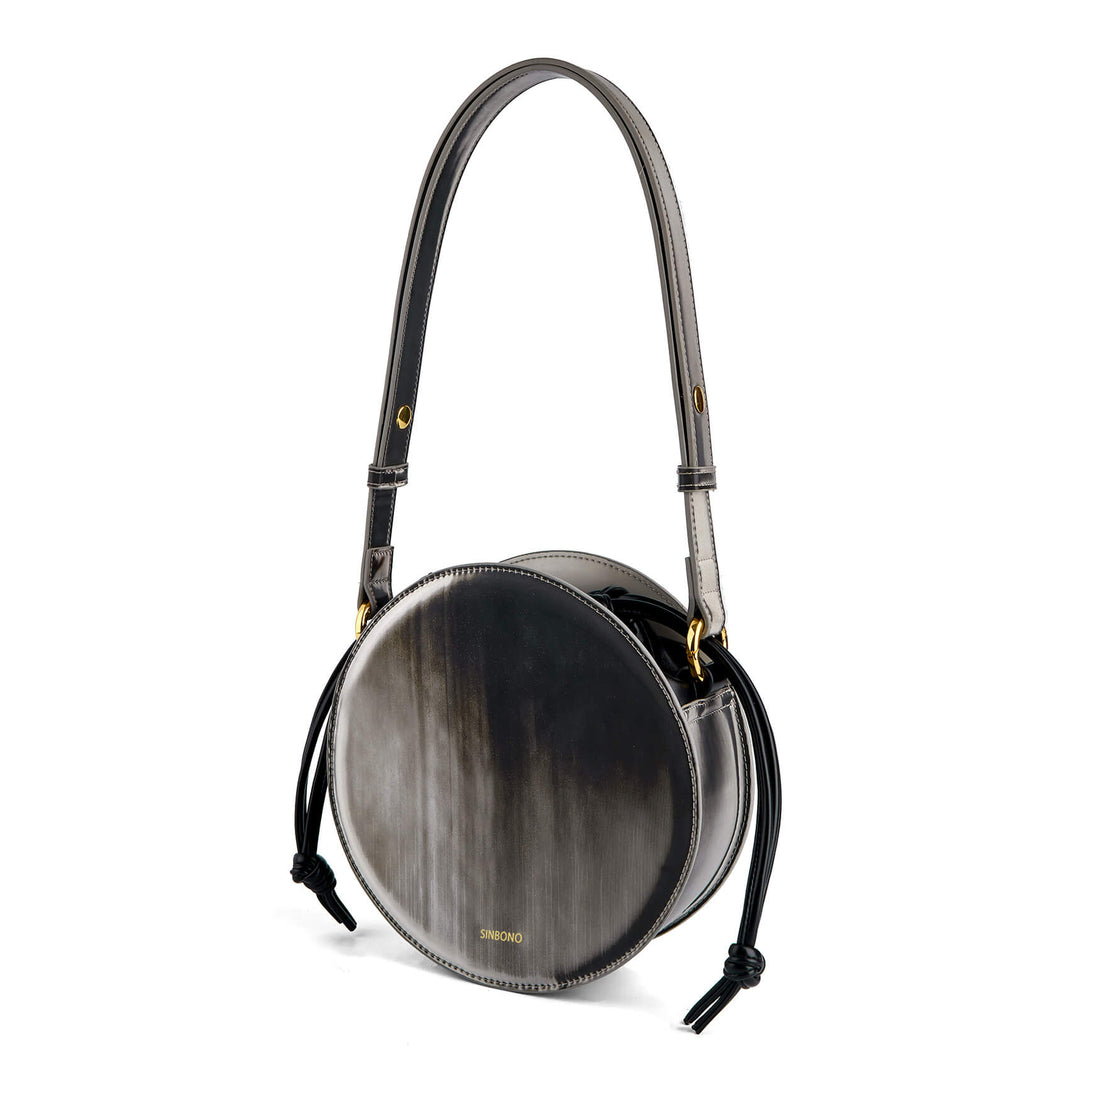 SINBONO Women's Designer Clutch Handbag